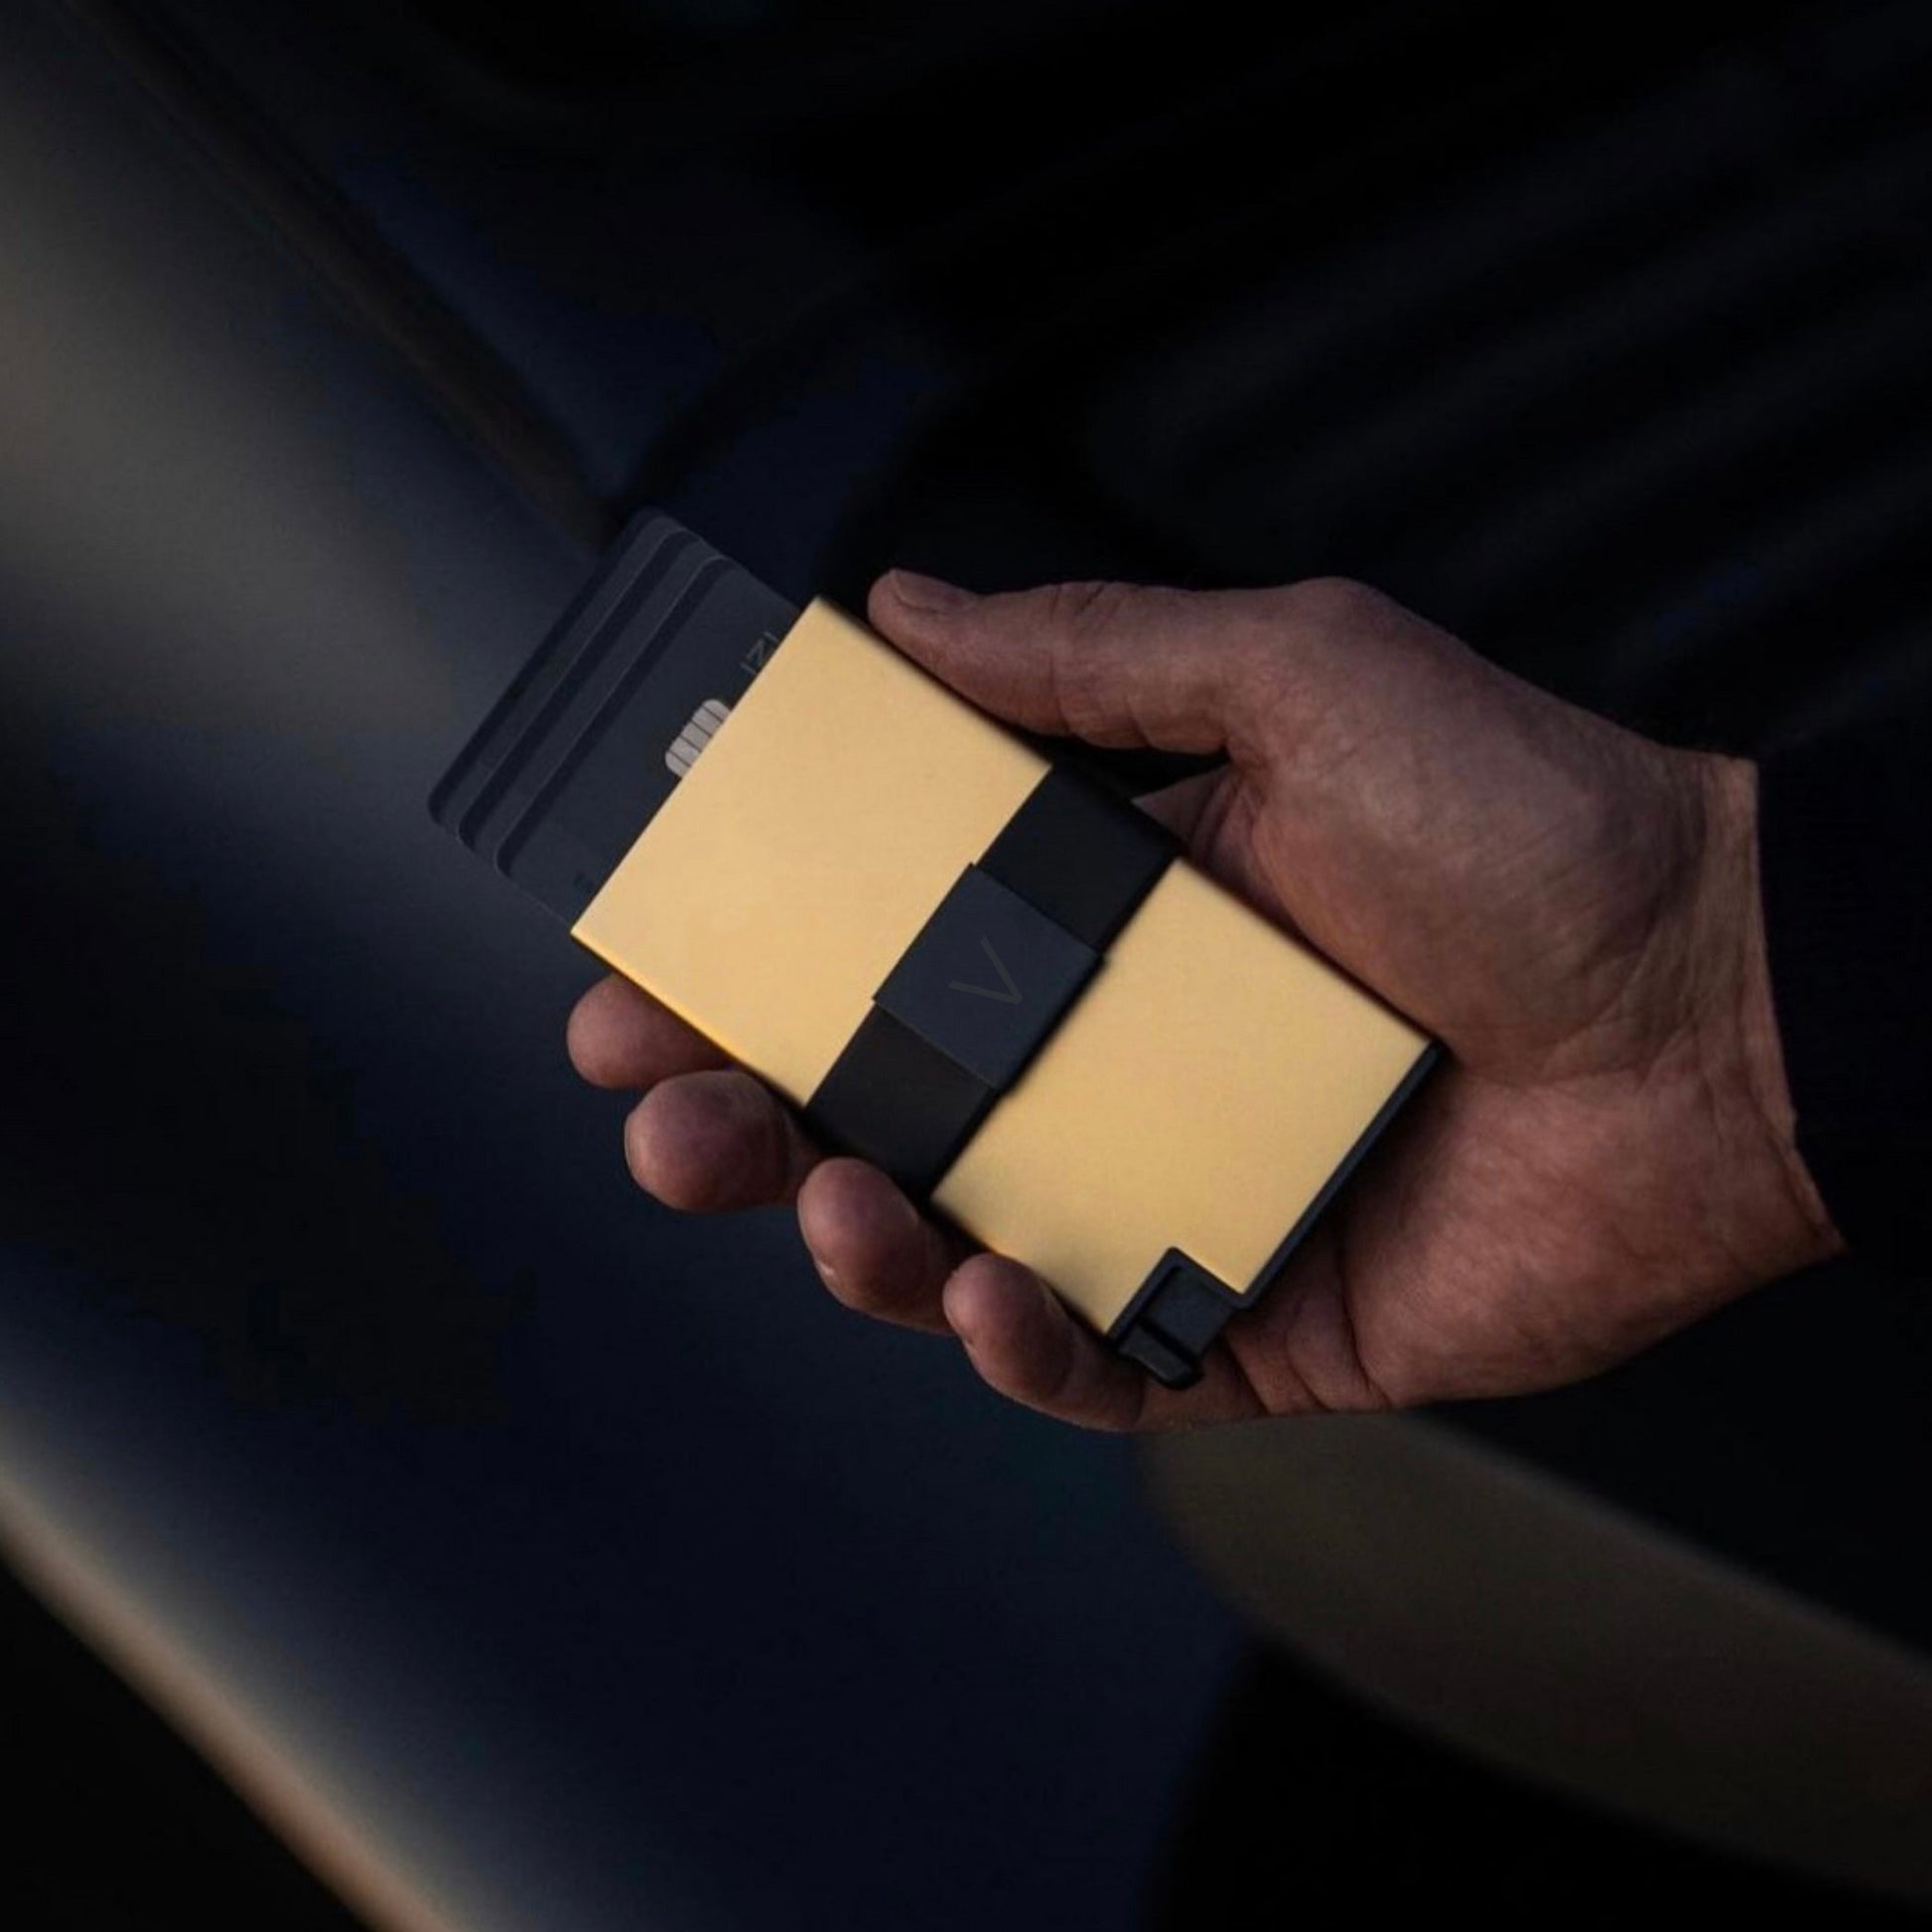 Leather Premium Smart Wallet for Men - Black - PW1010